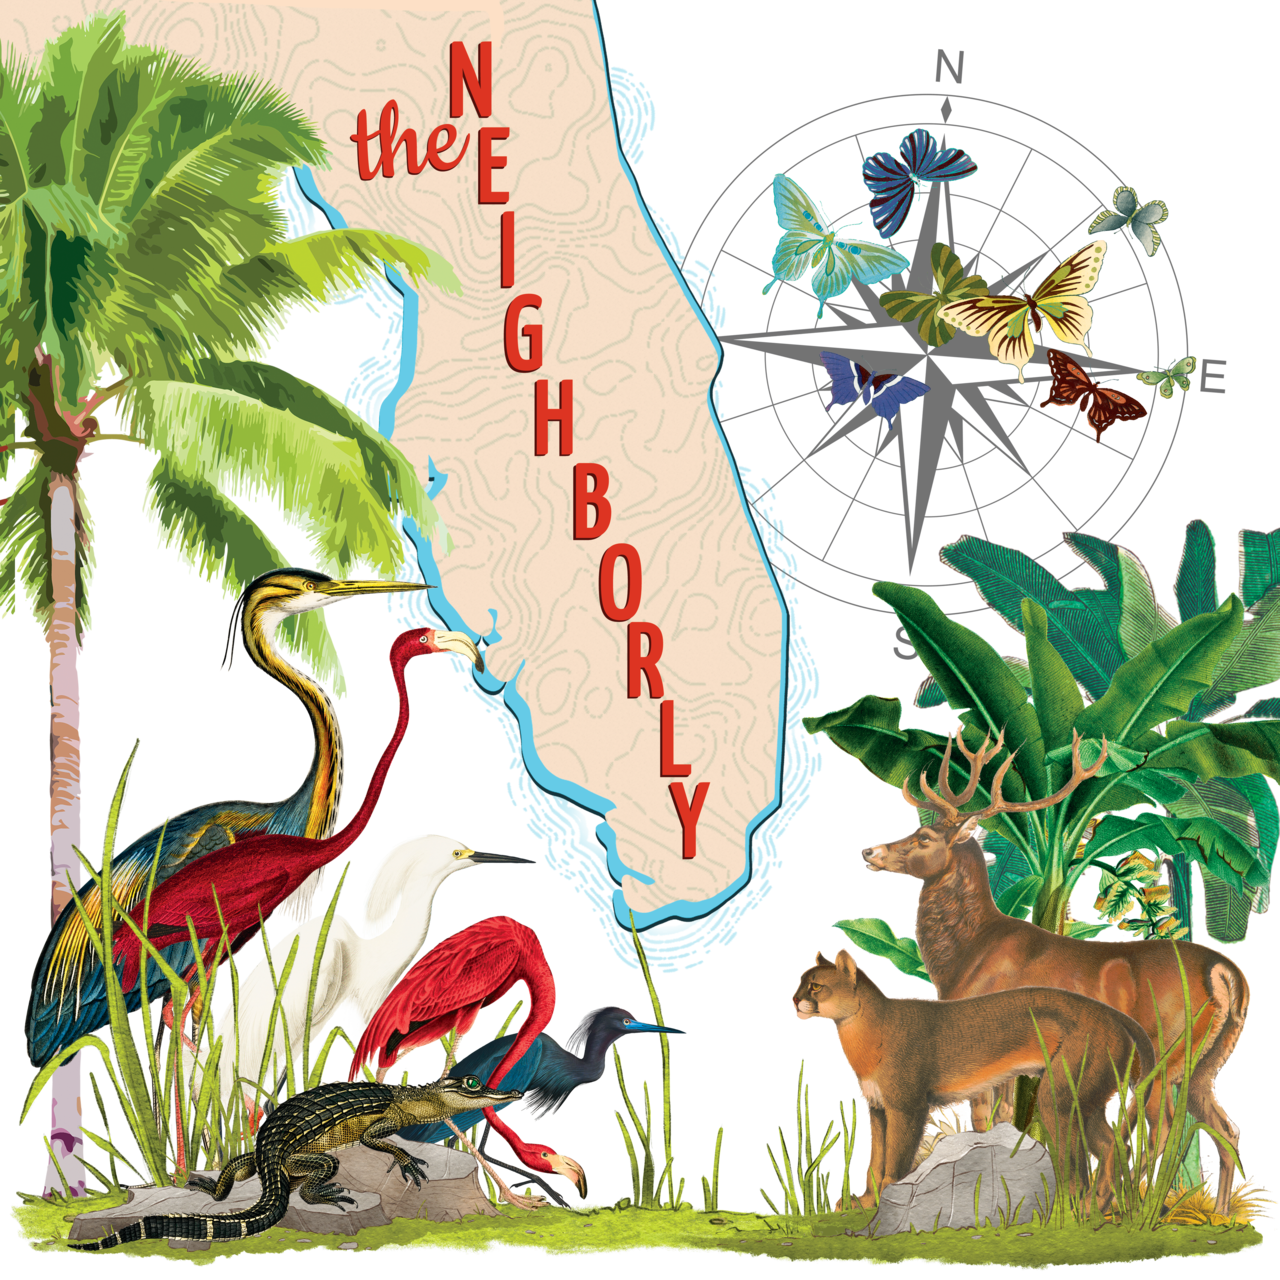 THE NEIGHBORLY FLORIDA